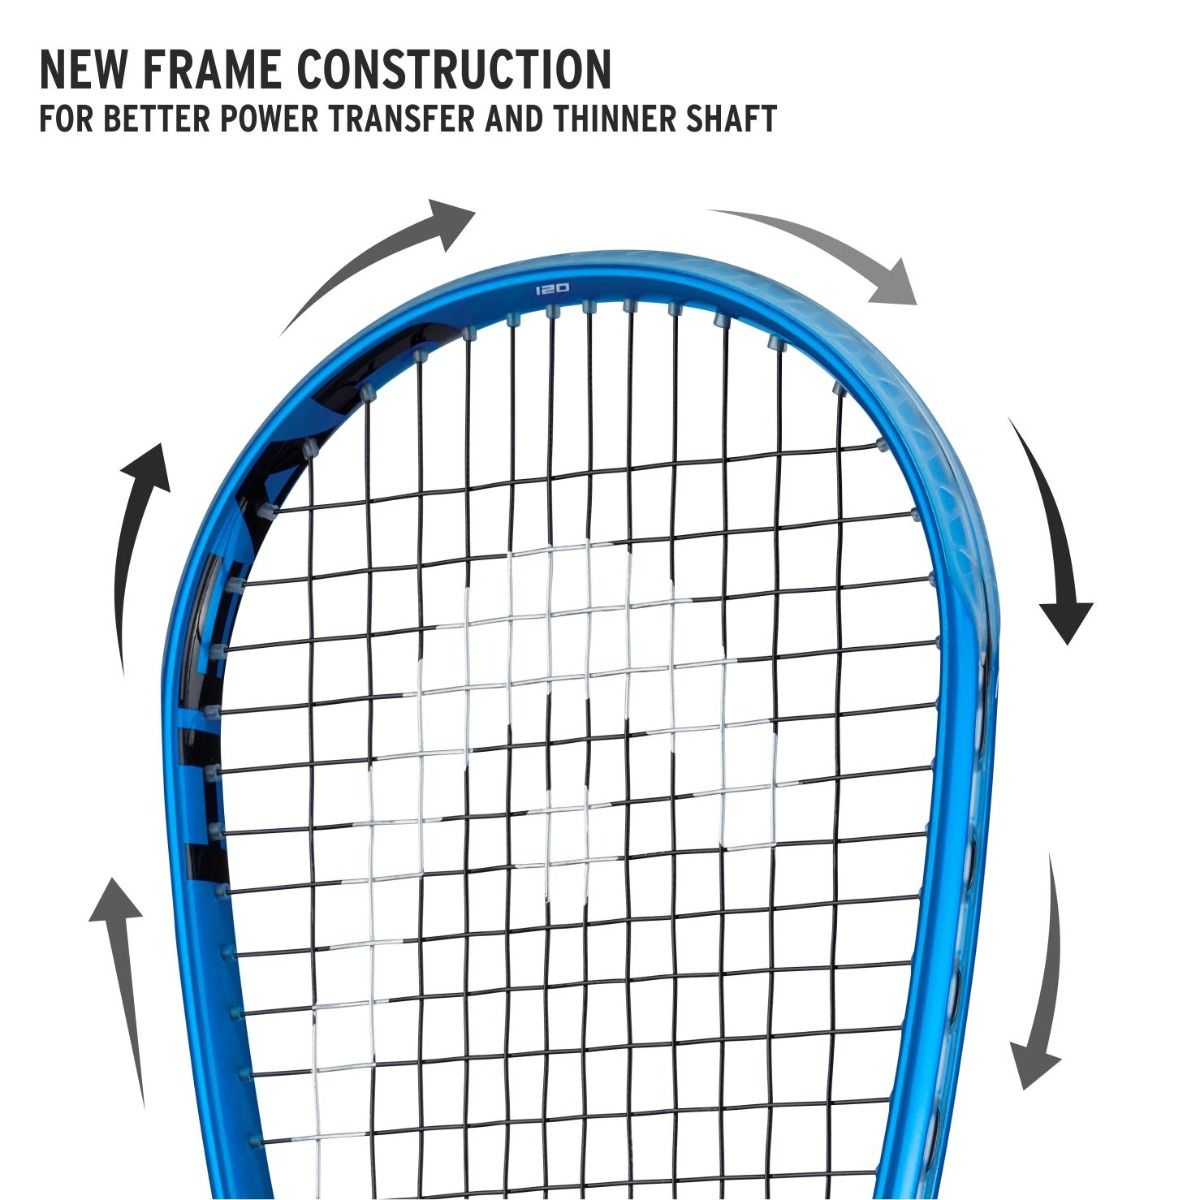 Head Extreme 120 Squash Racquet-Squash Rackets-Pro Sports